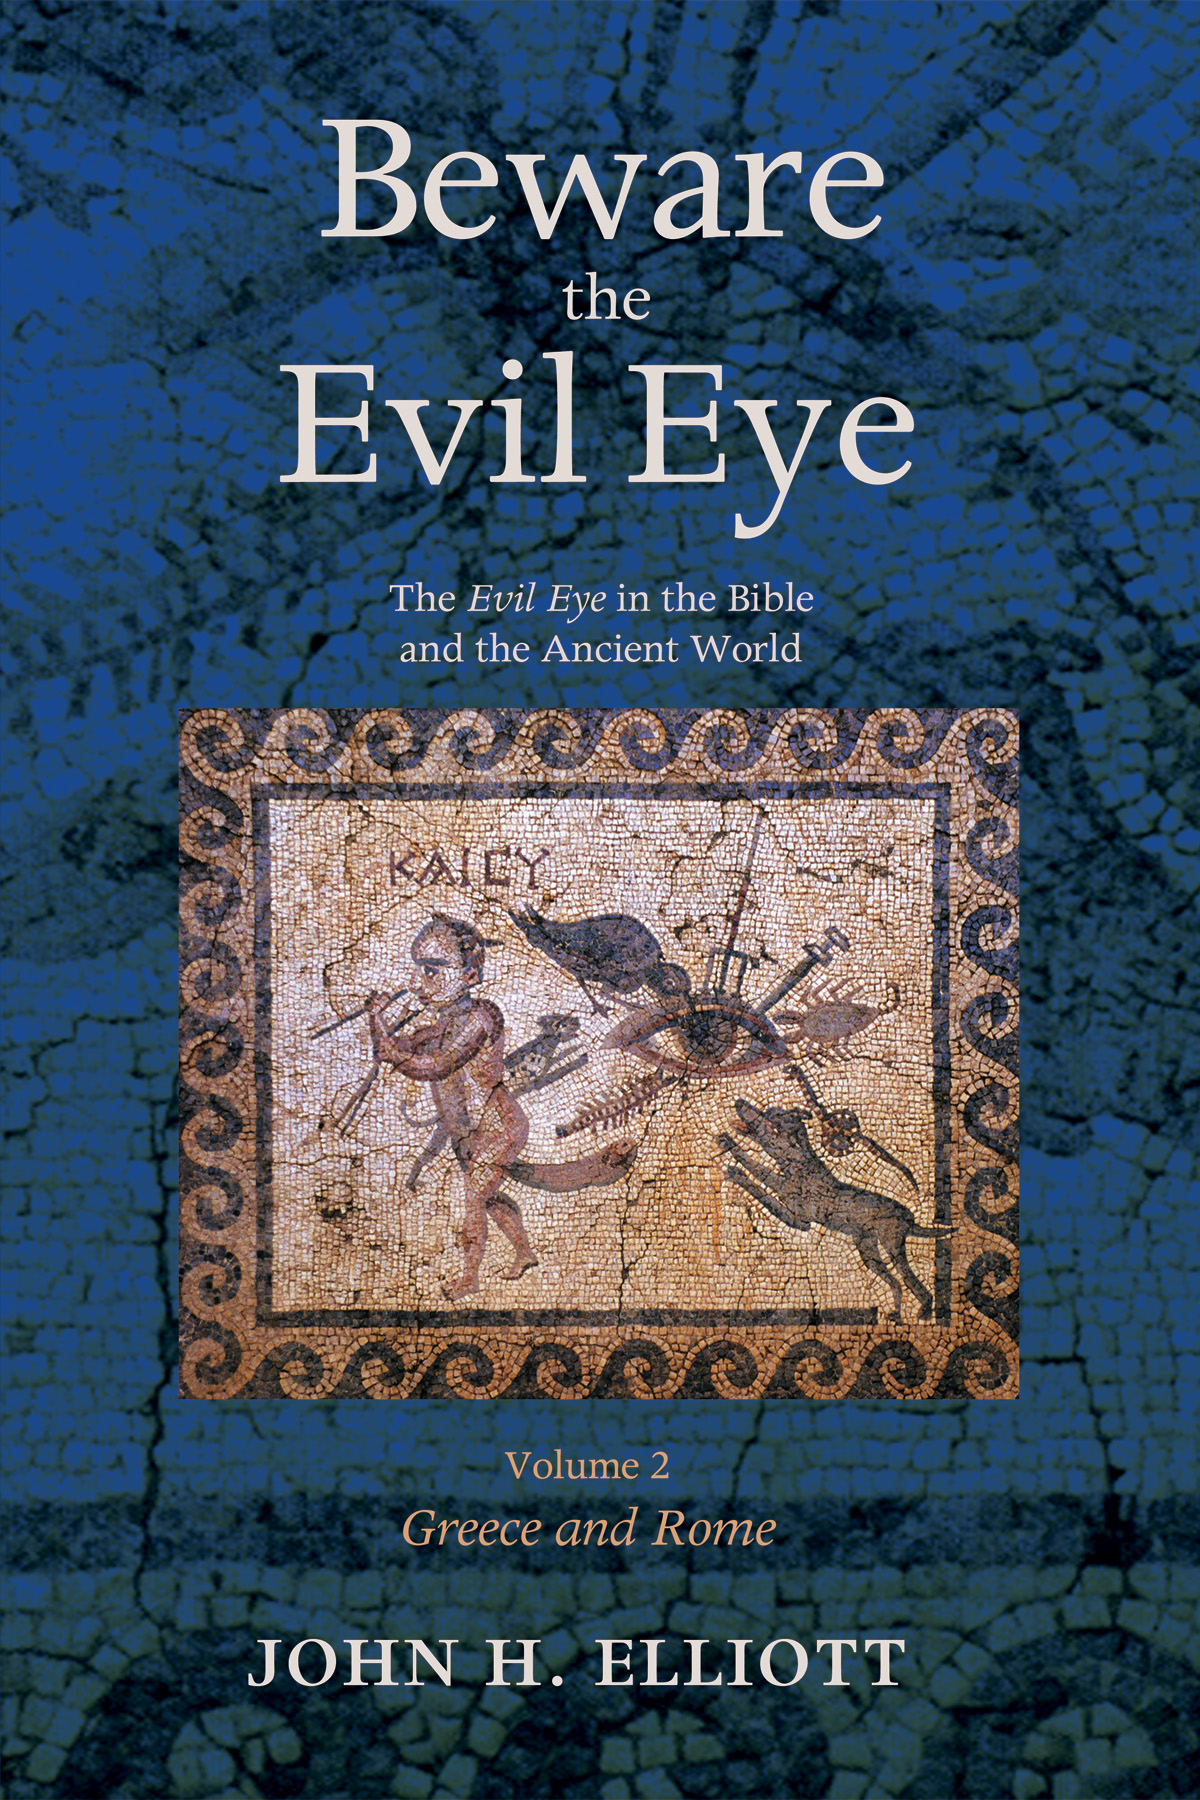 Beware the Evil Eye Volume 1 | WipfandStock.com